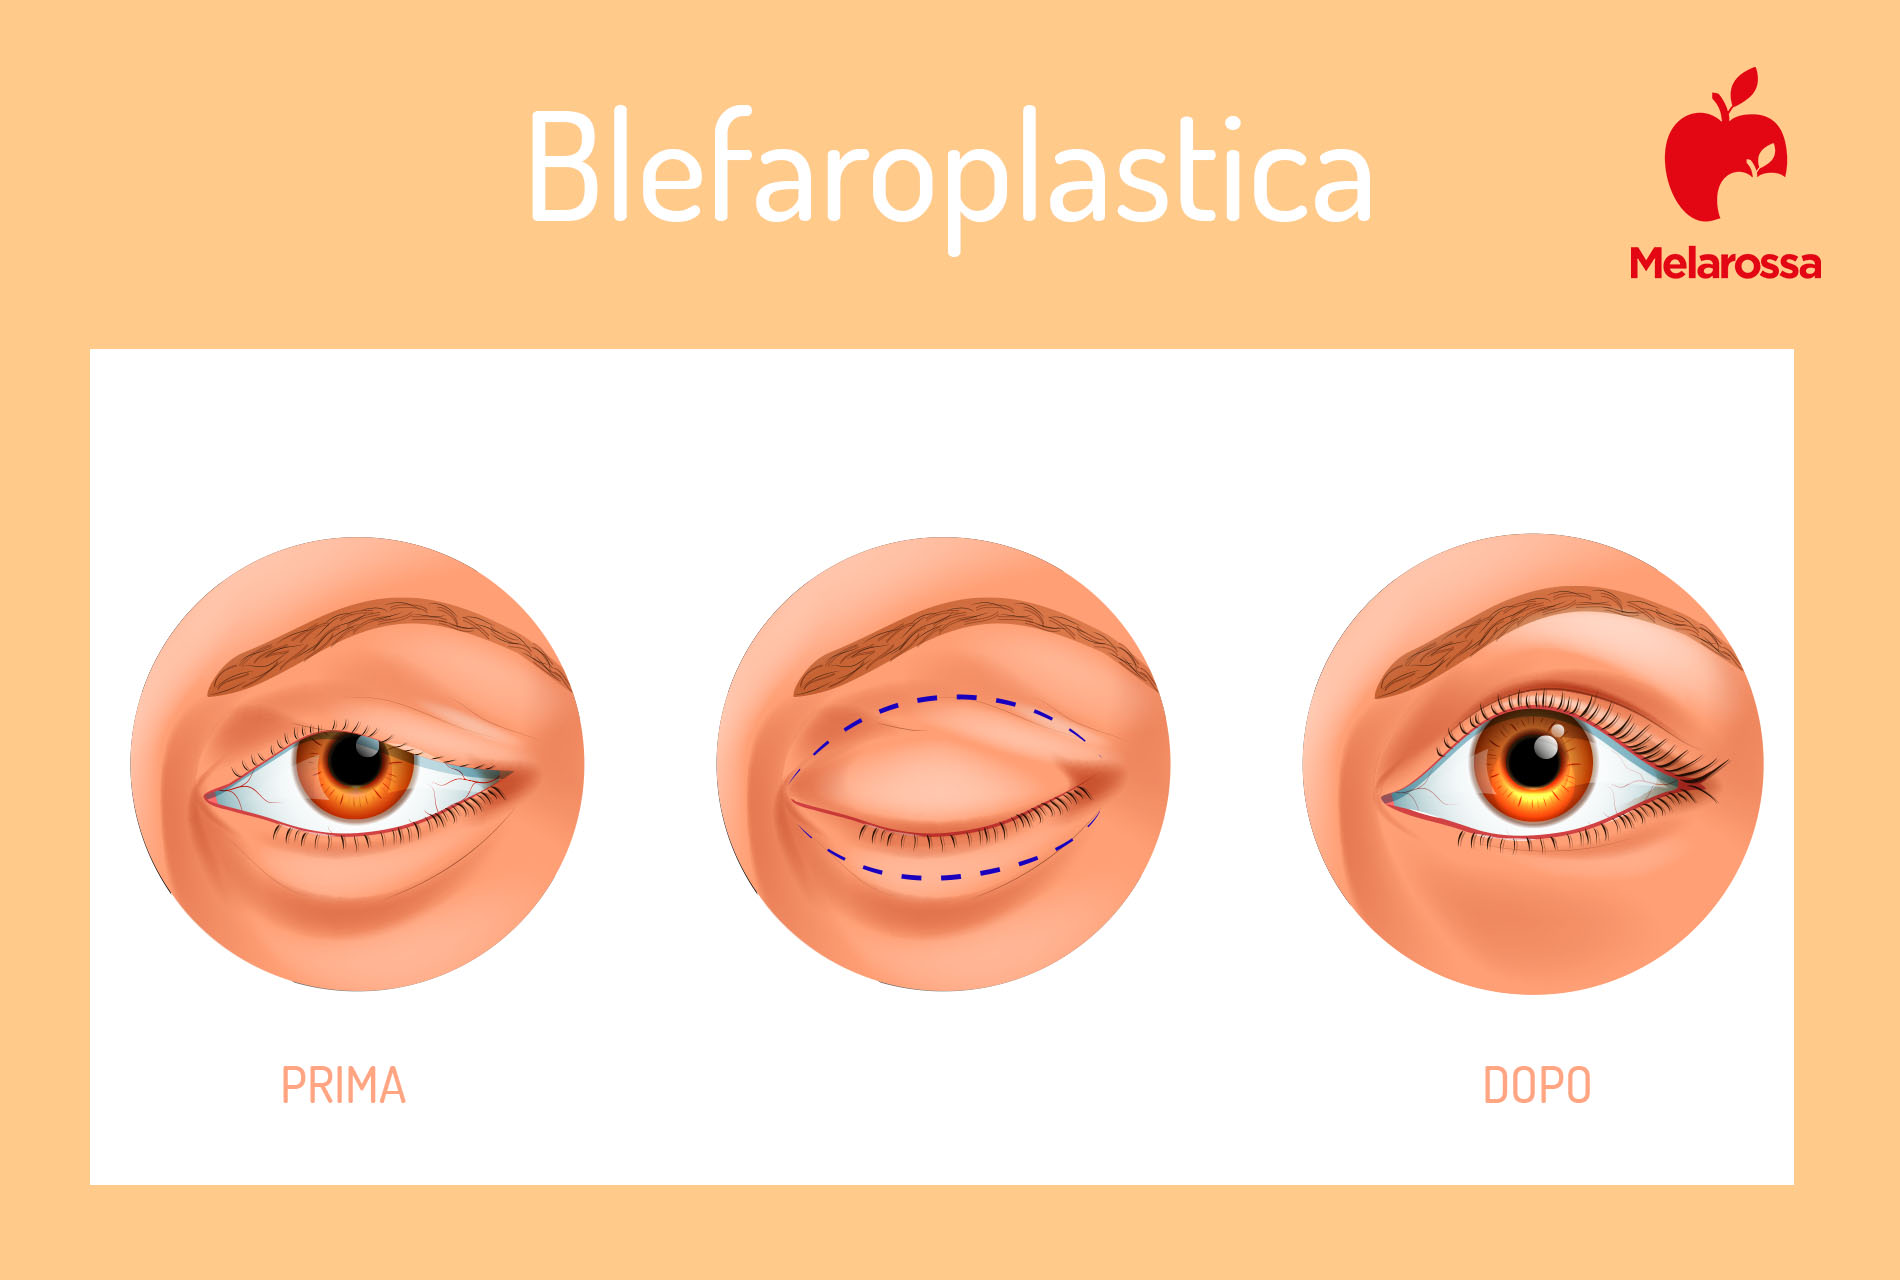 blefaroplastica: prima e dopo